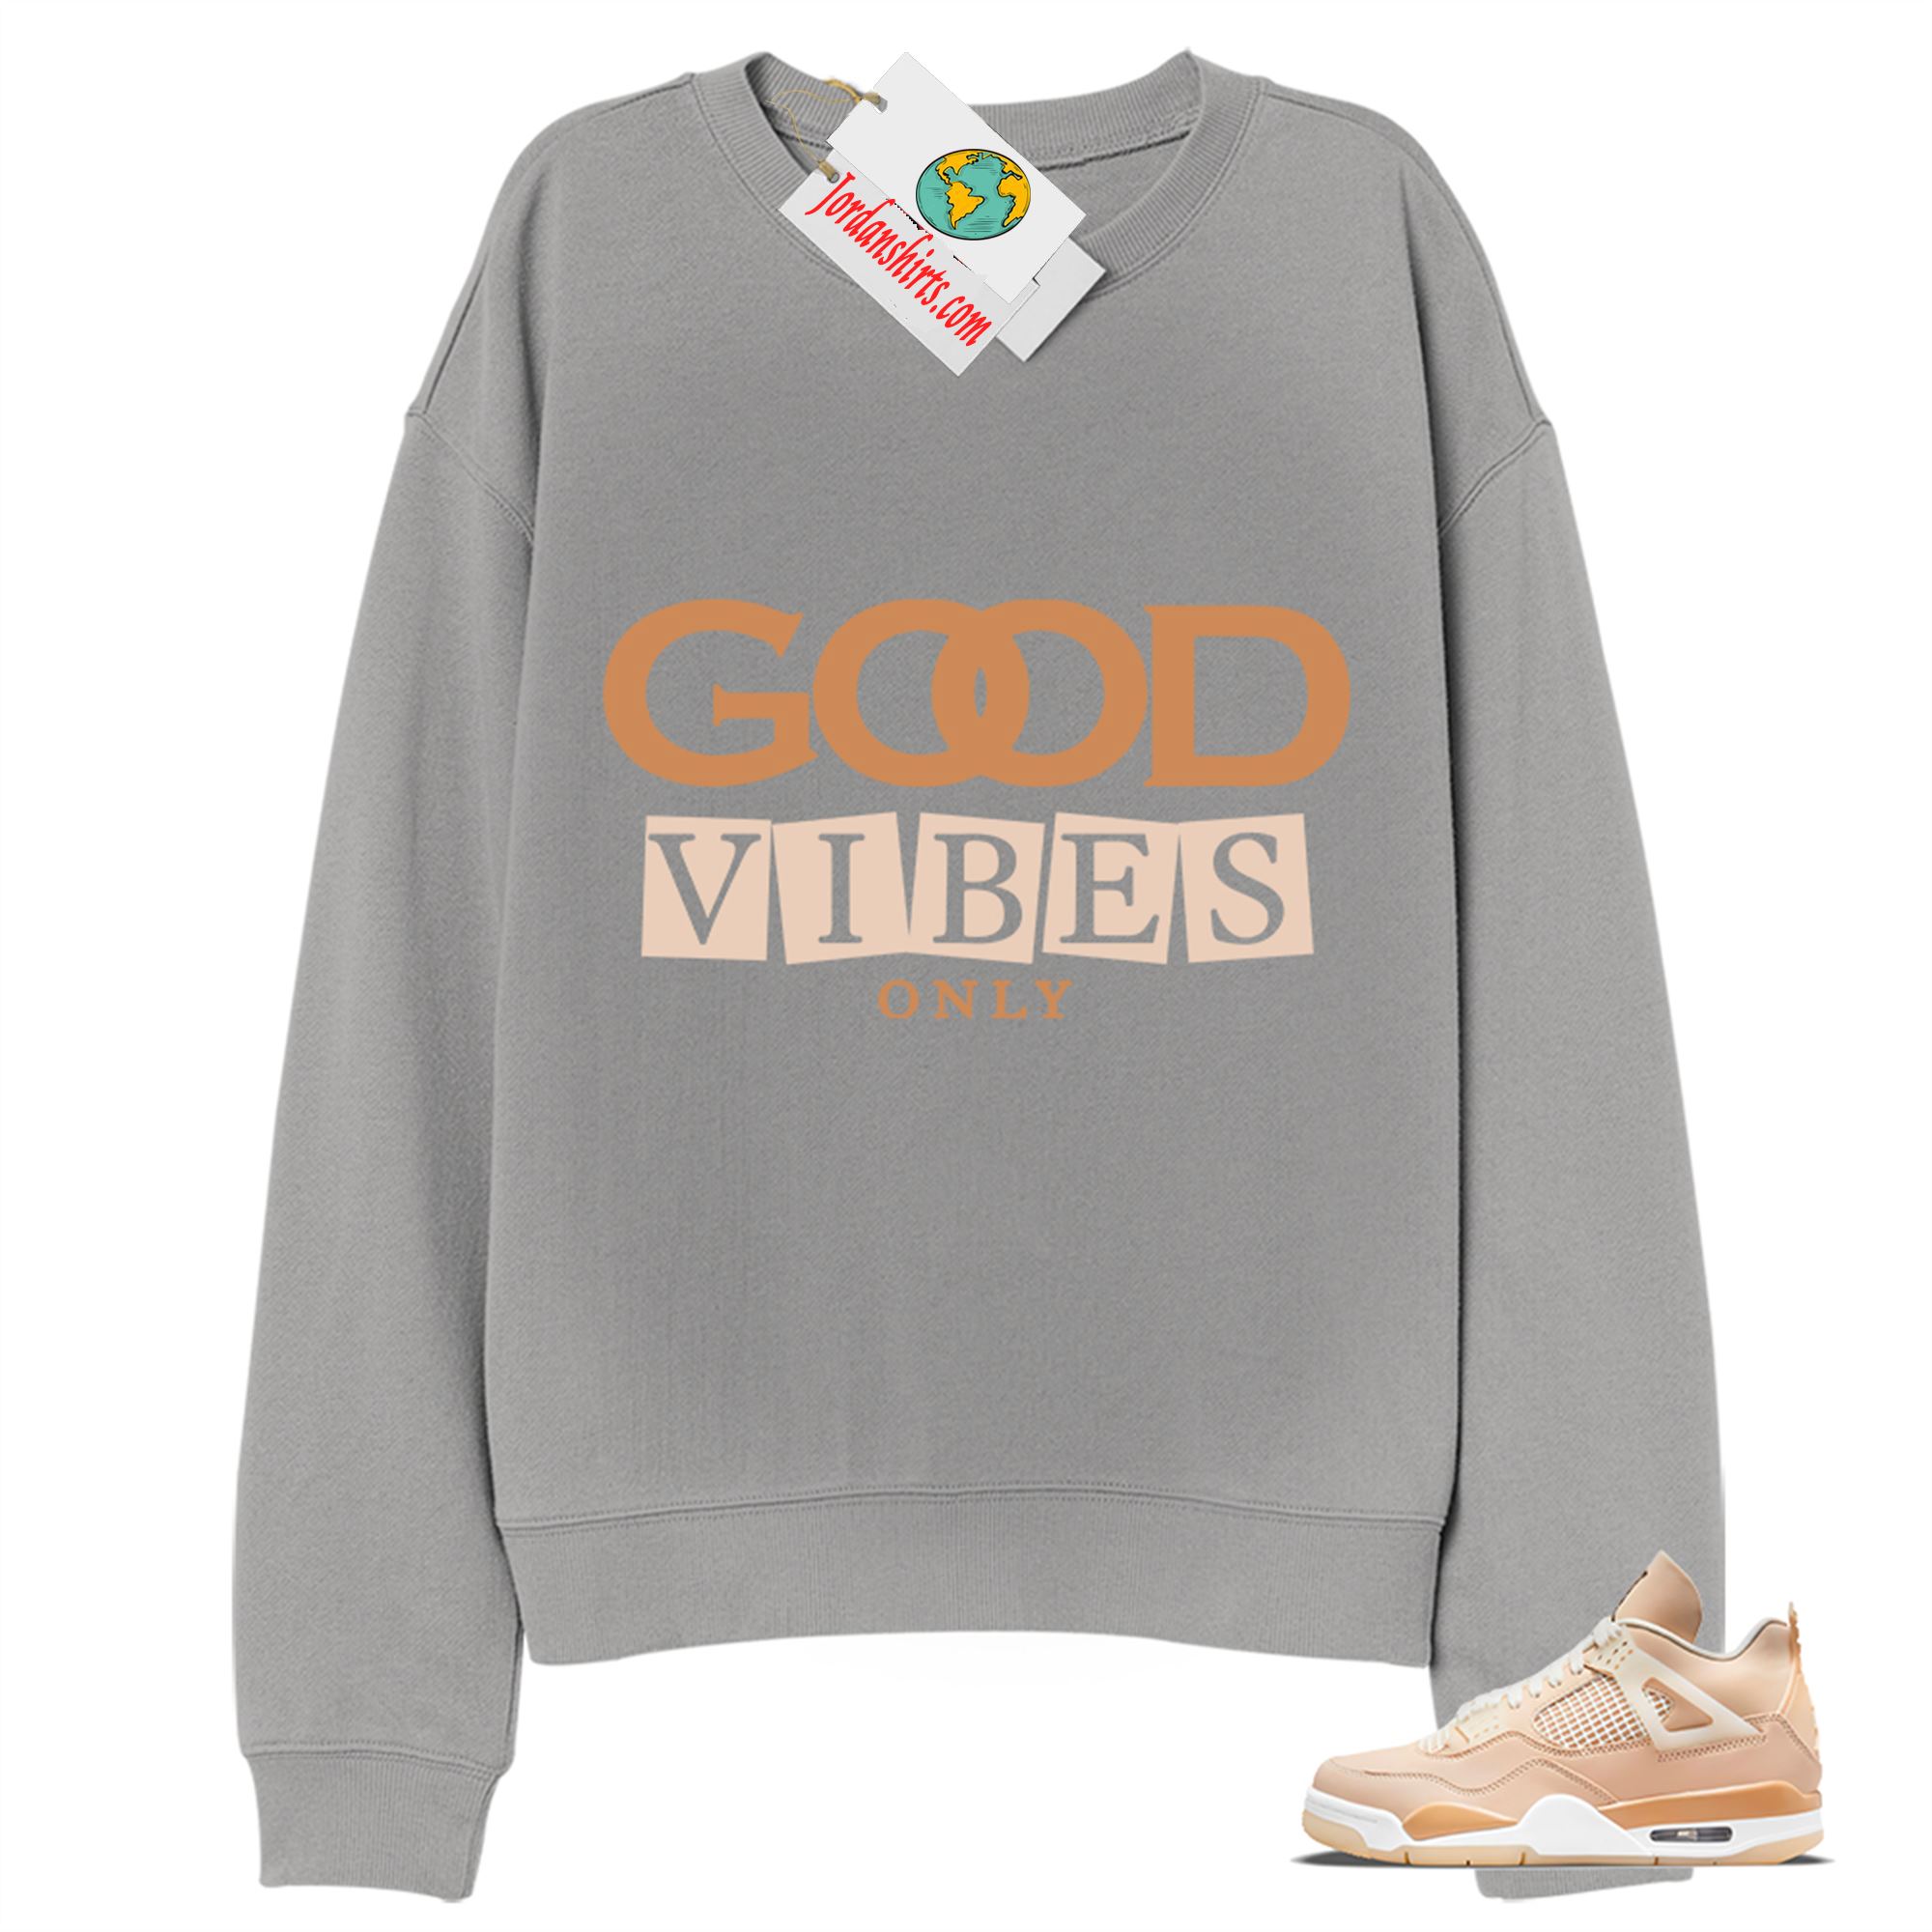 Jordan 4 Sweatshirt, Good Vibes Only Grey Sweatshirt Air Jordan 4 Shimmer 4s Full Size Up To 5xl